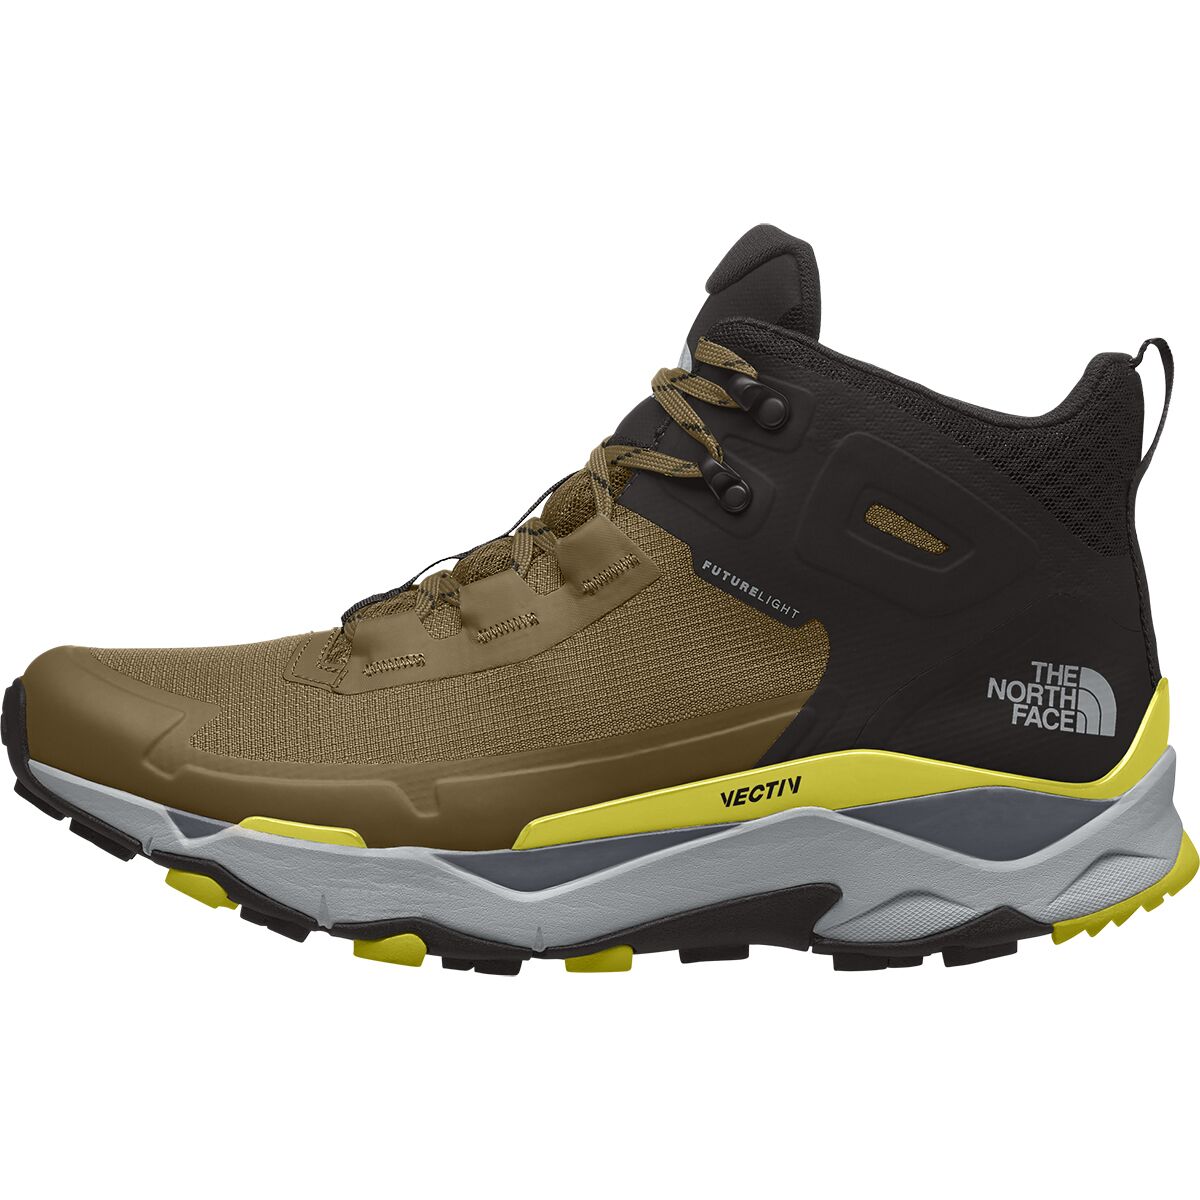 The North Face VECTIV Exploris Mid FUTURELIGHT Hiking Boot - Men's